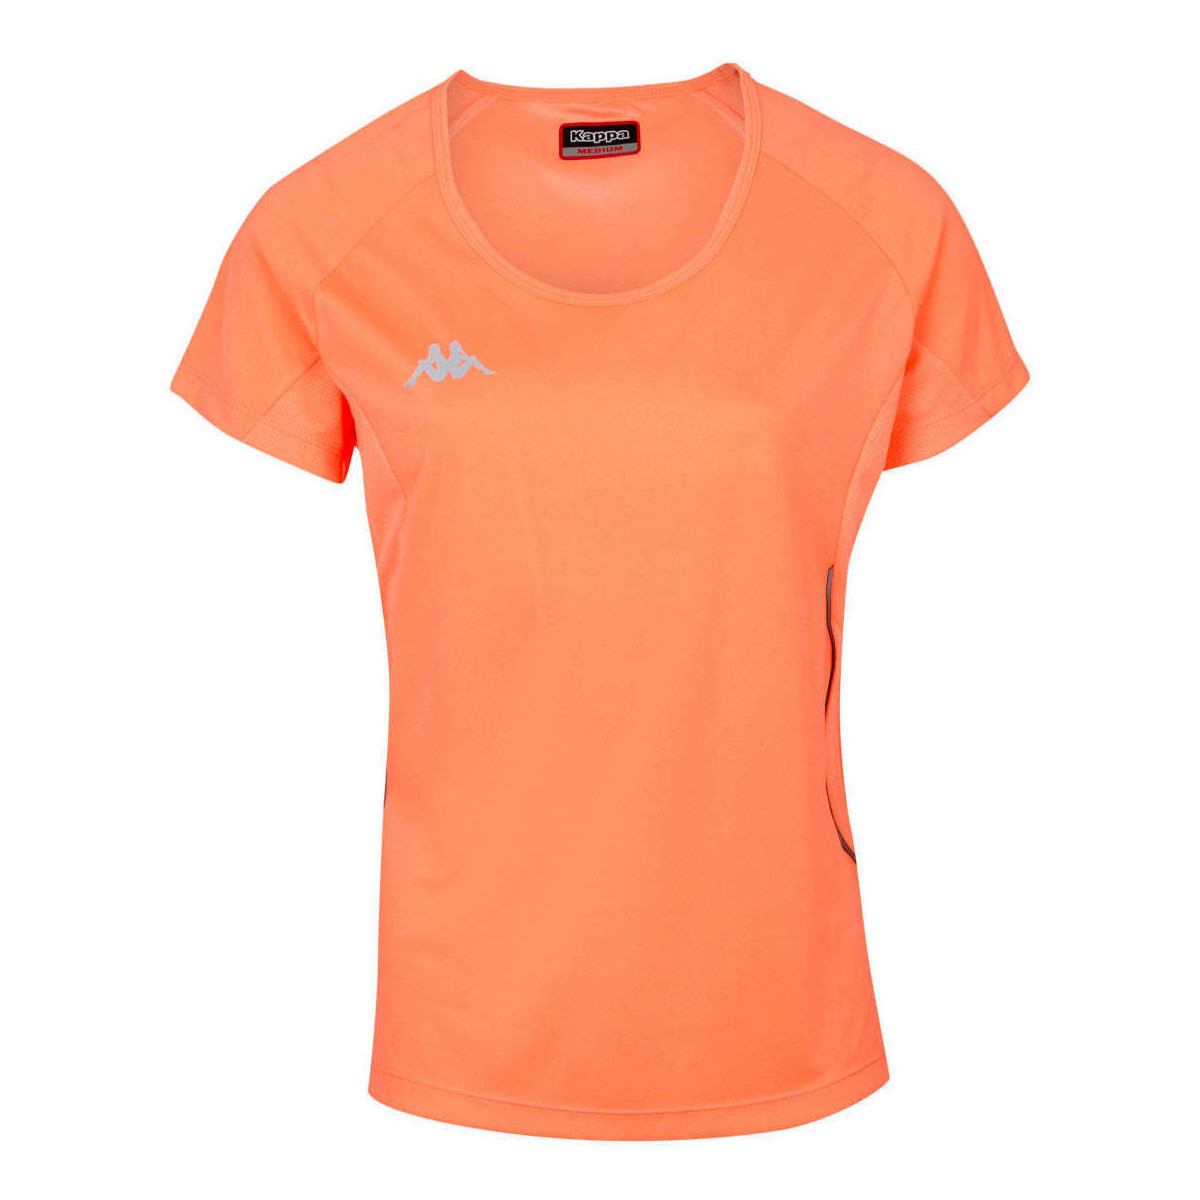 Kappa Orange T-shirt Fania wUBpCX04